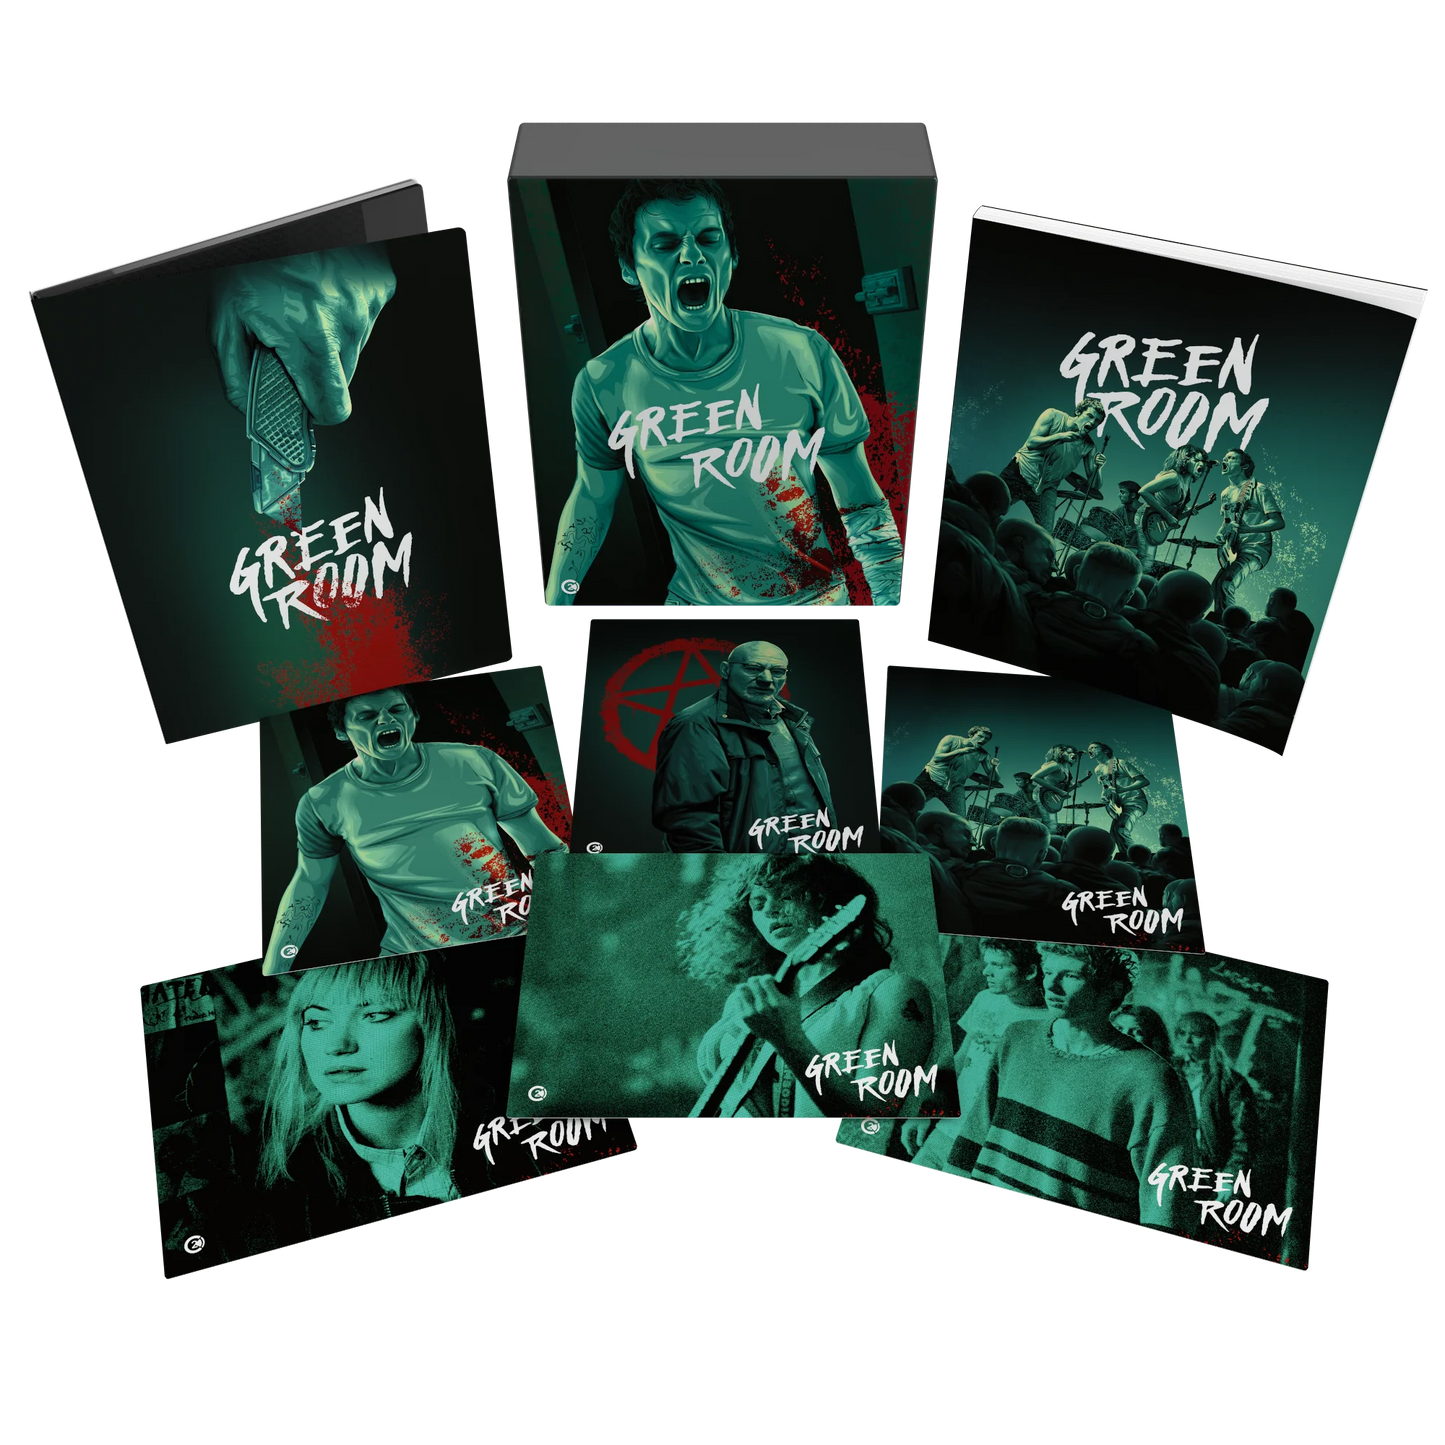 Green Room Limited Edition 4K UHD & Blu-ray (Second Sight/Region Free/B) [Preorder]